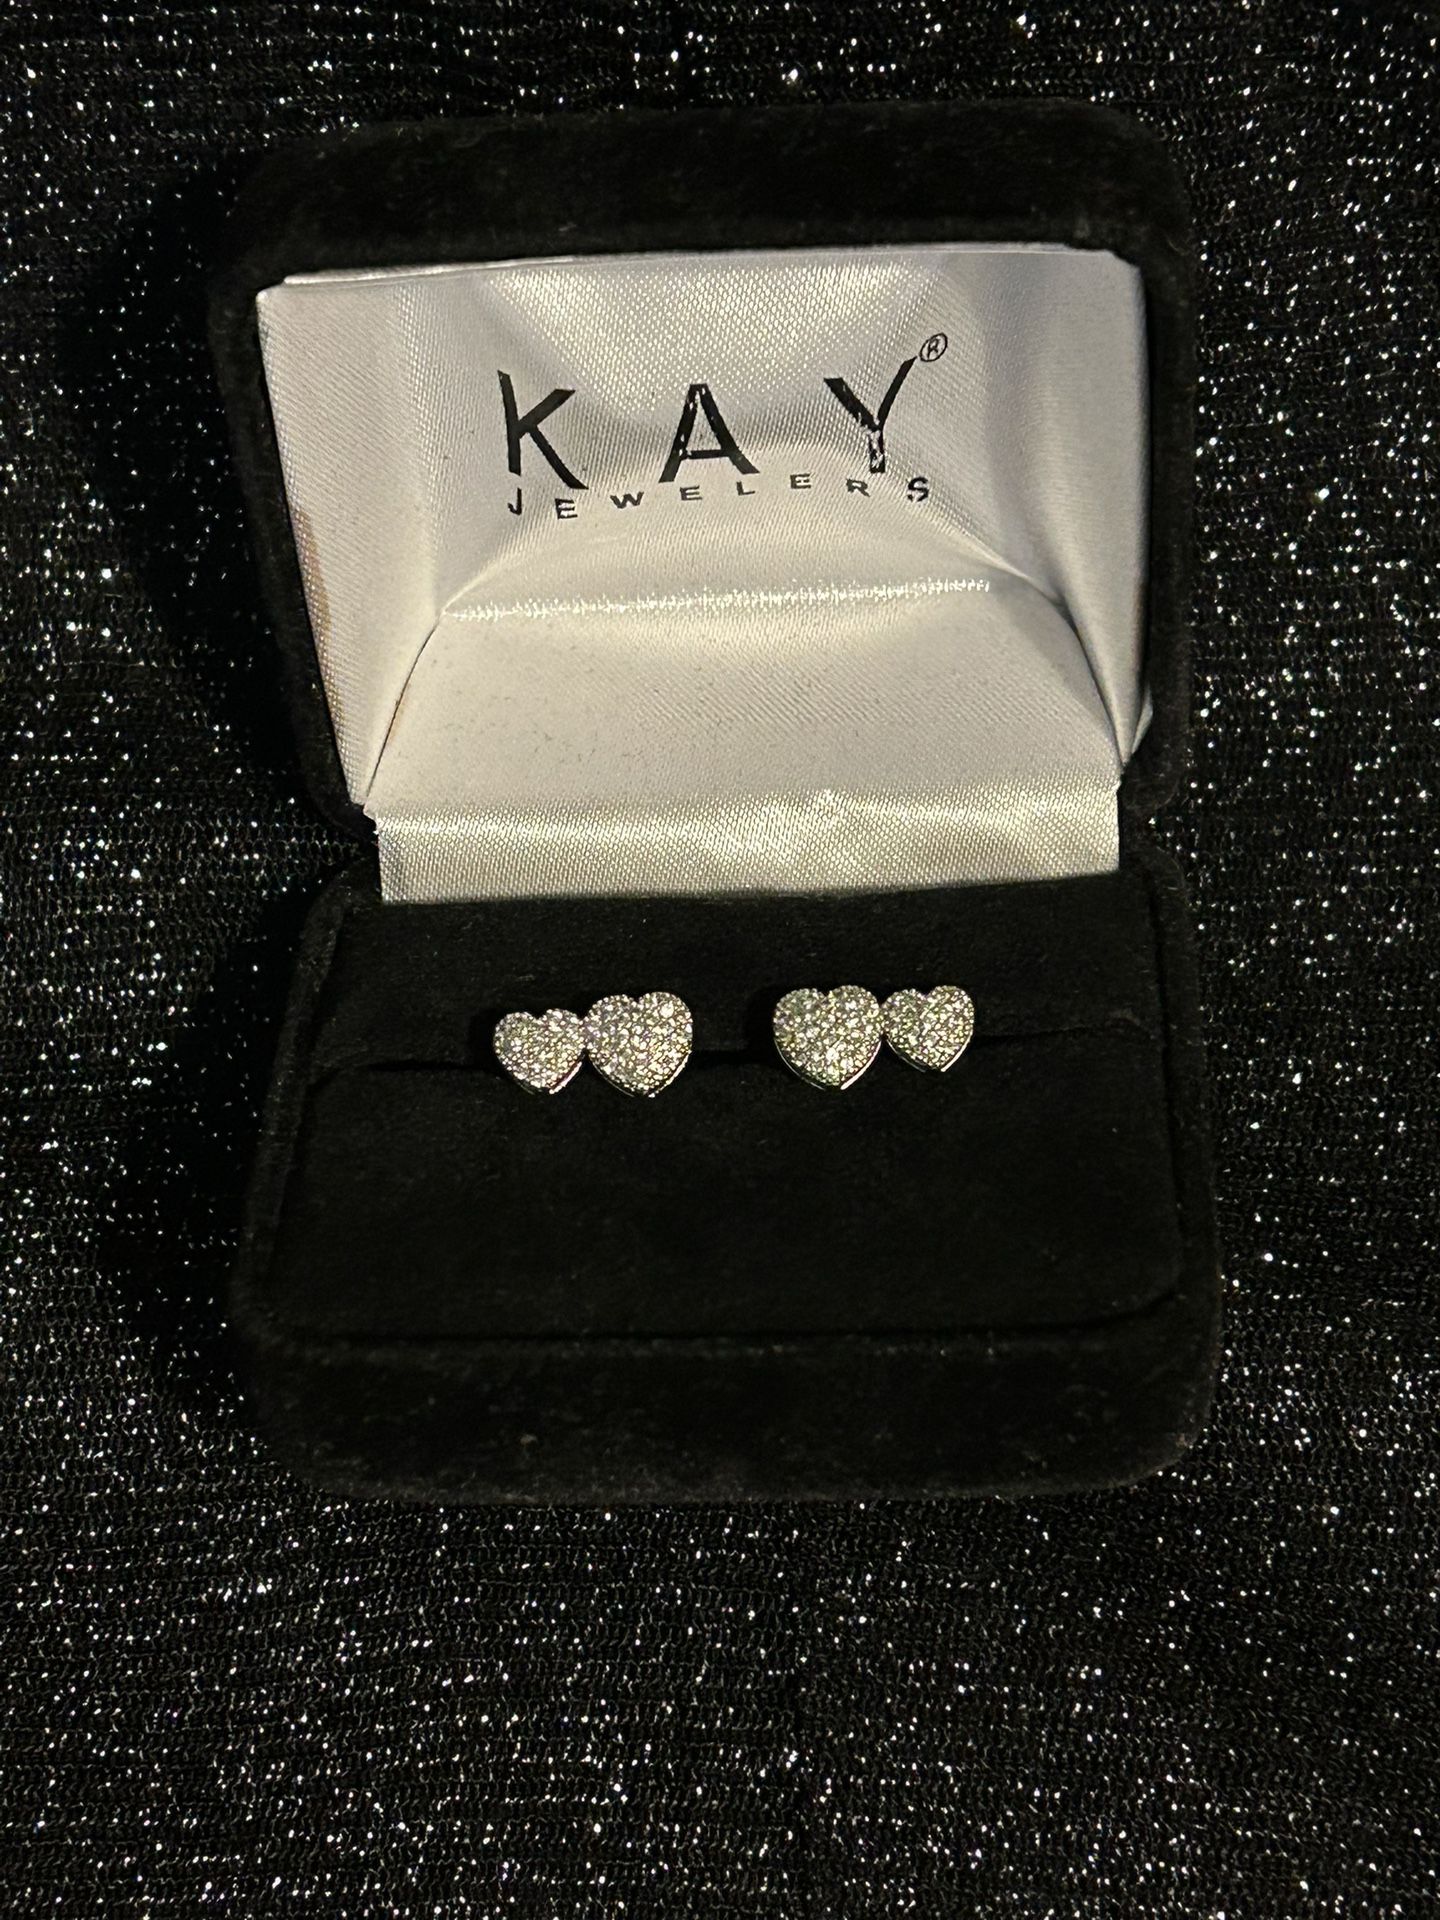 Kay’s white sapphire lab created diamond earrings 